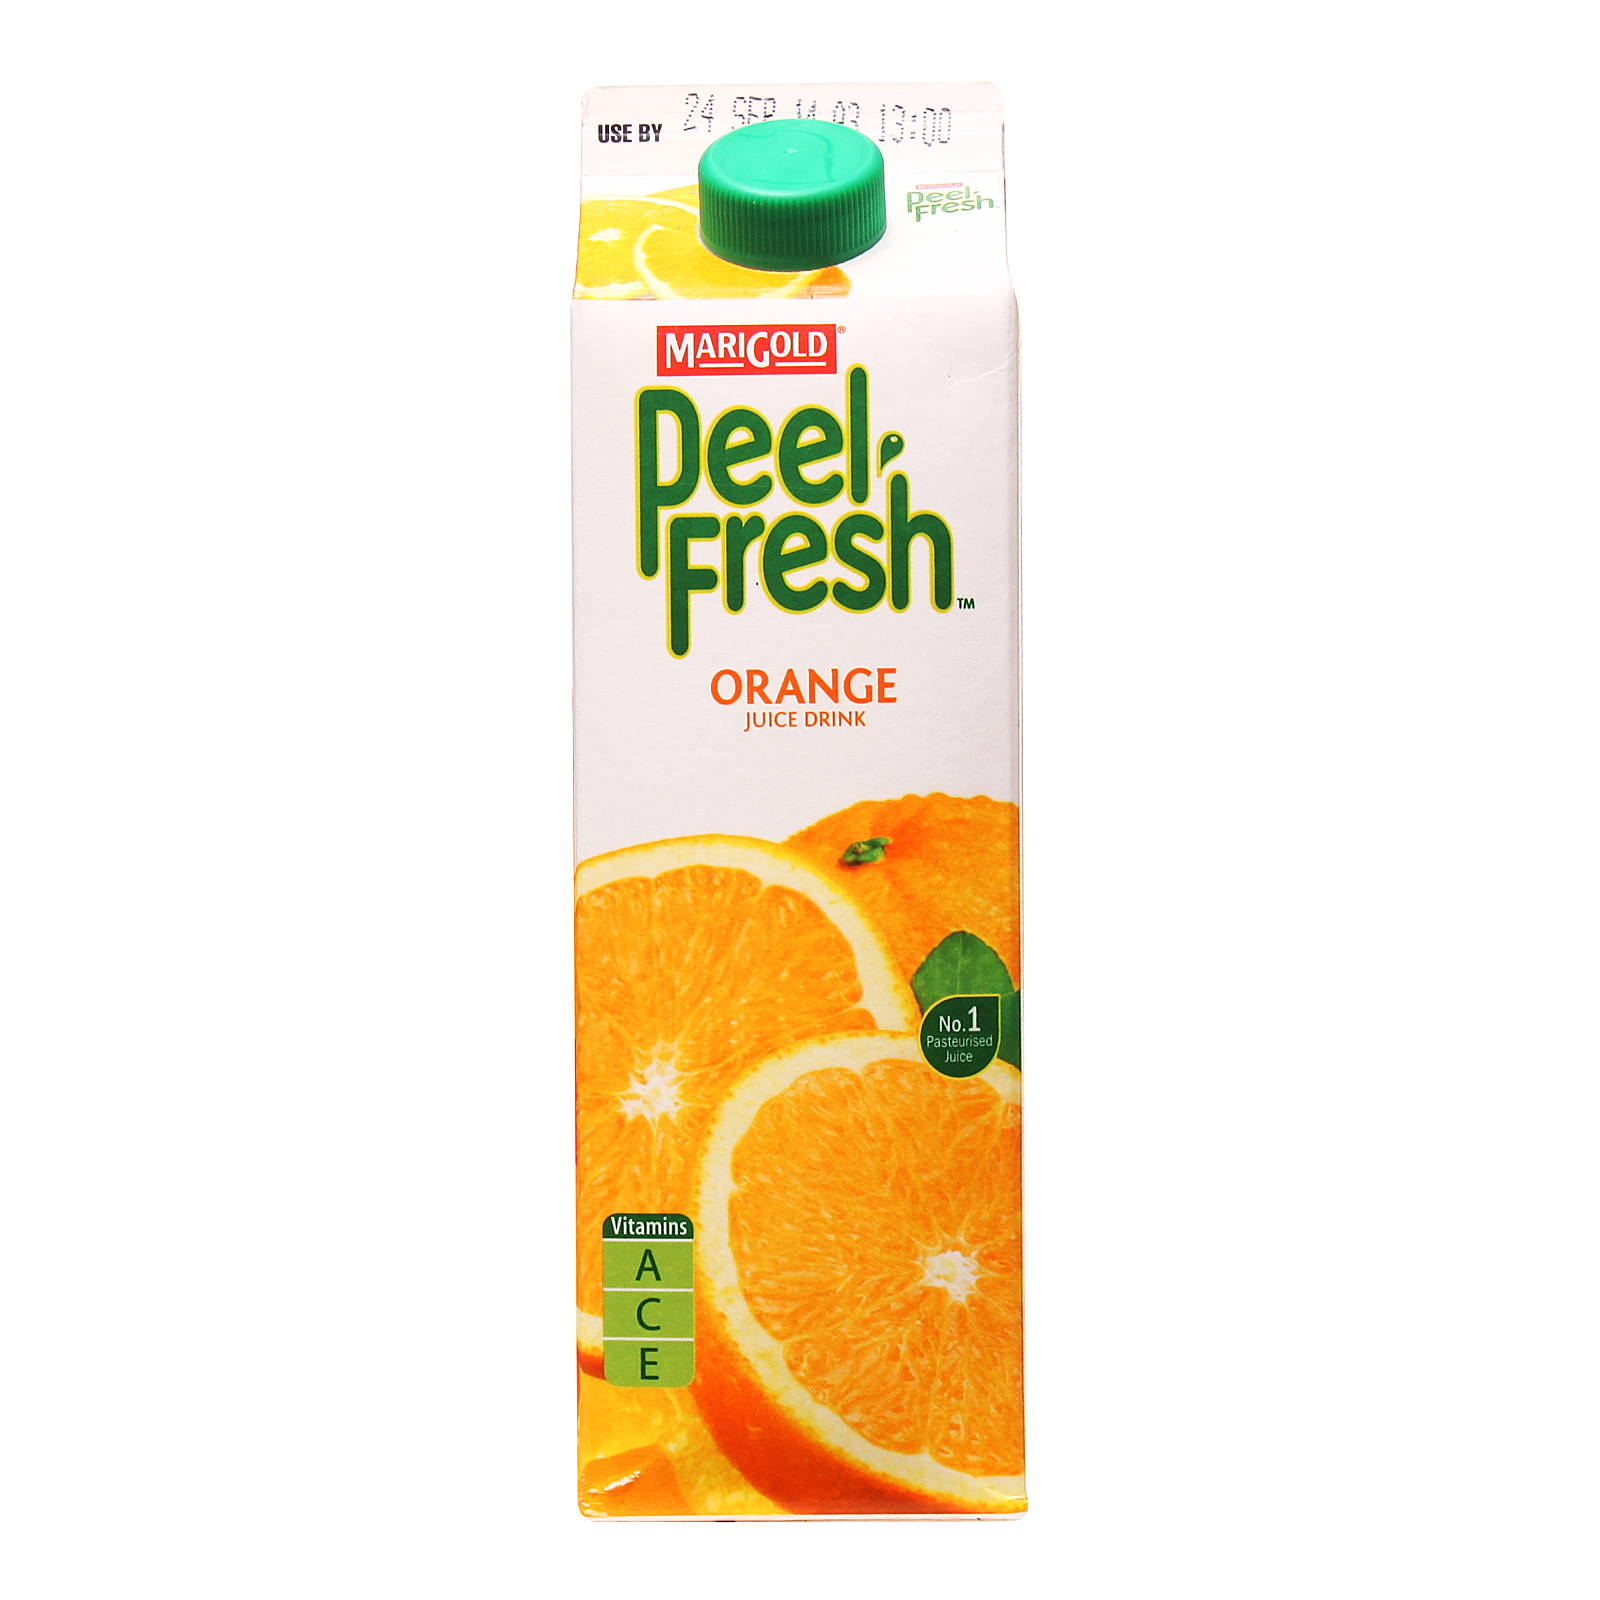 MARIGOLD Peel Fresh Juice Drink - Orange 0 - from RedMart